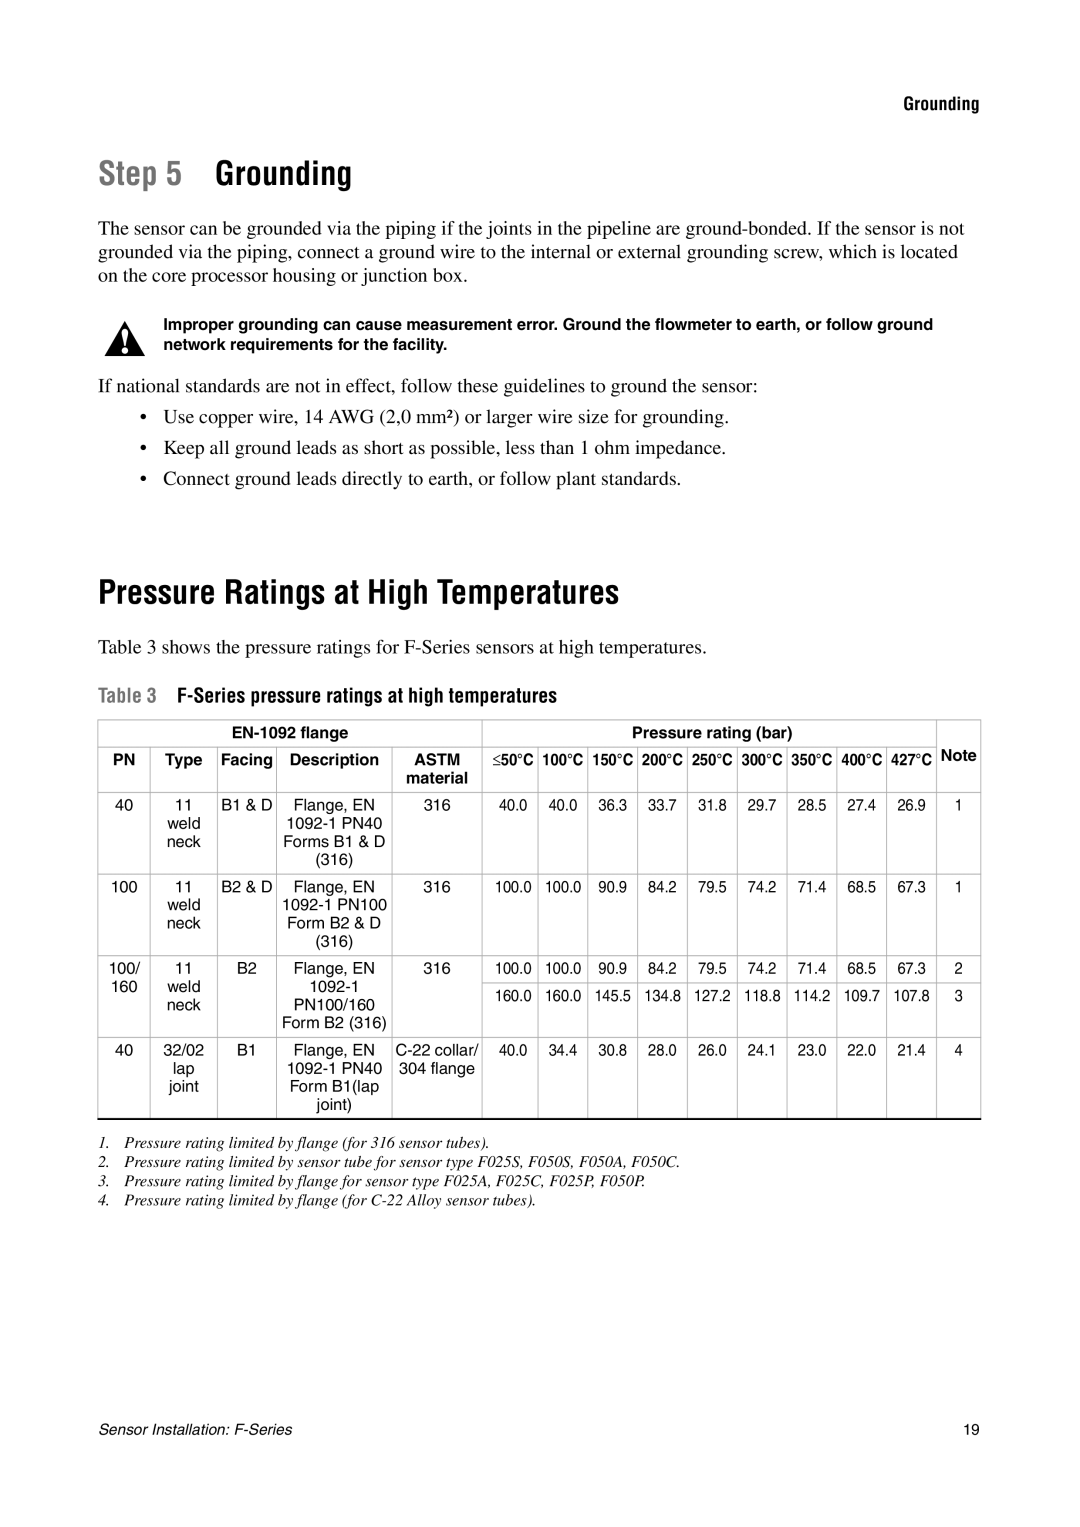 Emerson F-SERIES SENSOR installation manual Grounding, Pressure Ratings at High Temperatures 